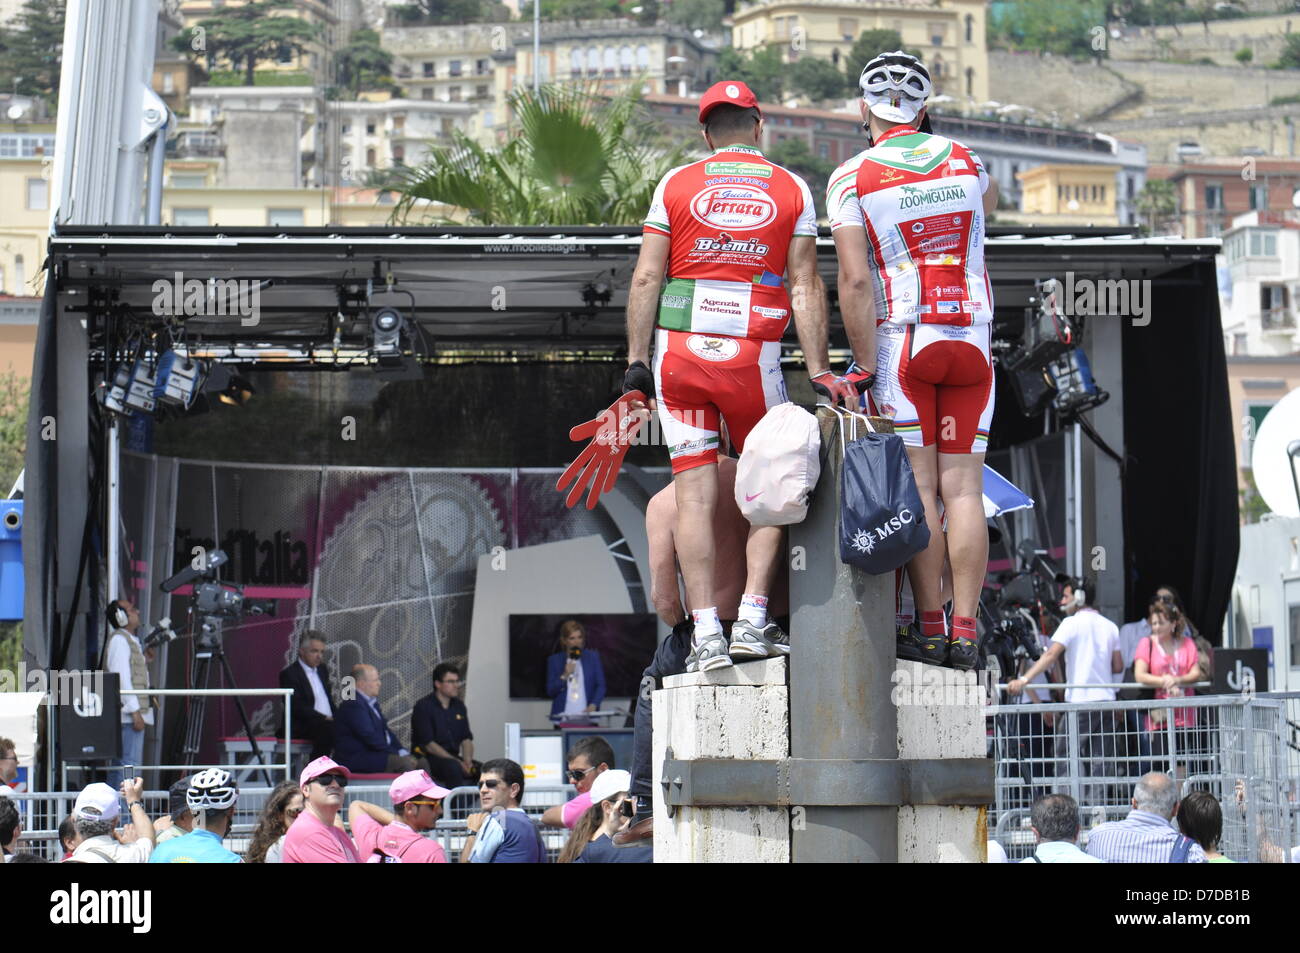 Neapel, Italien. 4. Mai 2013. Fans warten auf das Rennen beginnen bei der Giro d ' Italia am 4. Mai 2013 in Neapel. Bildnachweis: Enrico Della Pietra / Alamy Live News Stockfoto